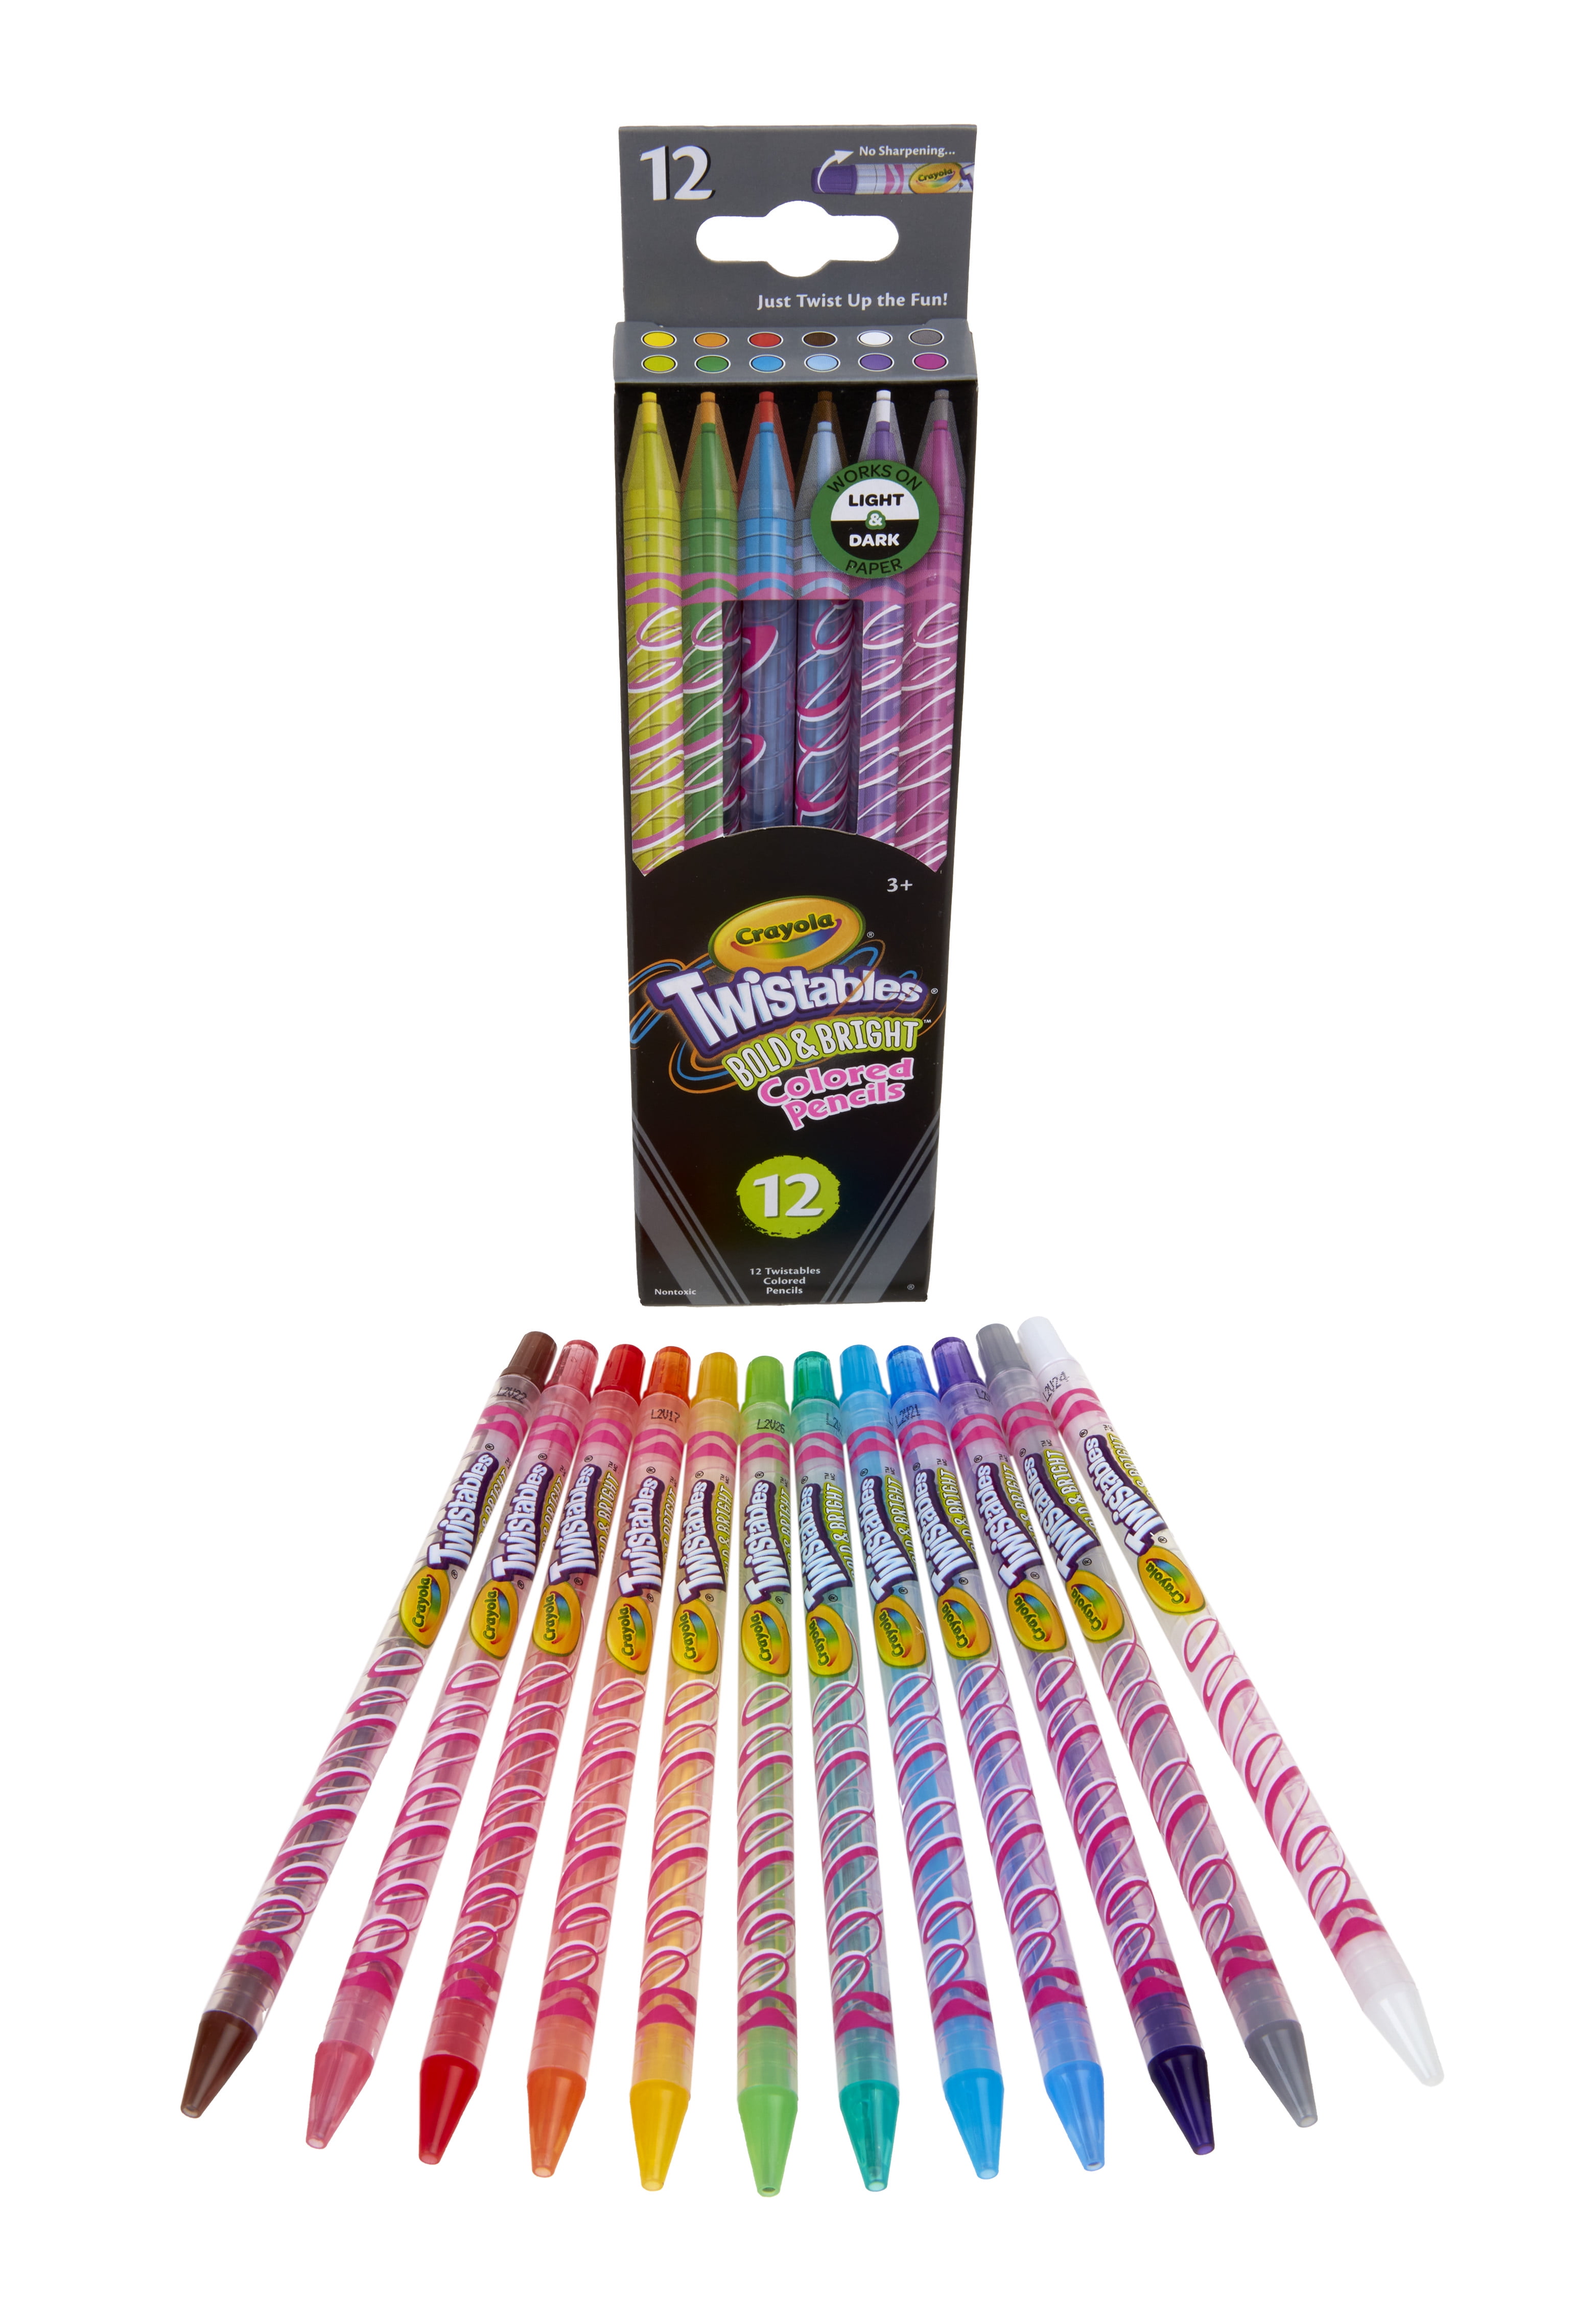 Crayola Twistables Colored Pencil Set, 12-colors, Ready to Ship, Art  Supplies, Crayola Colored Pencils, No Sharpen Twistable Colored Pencils 